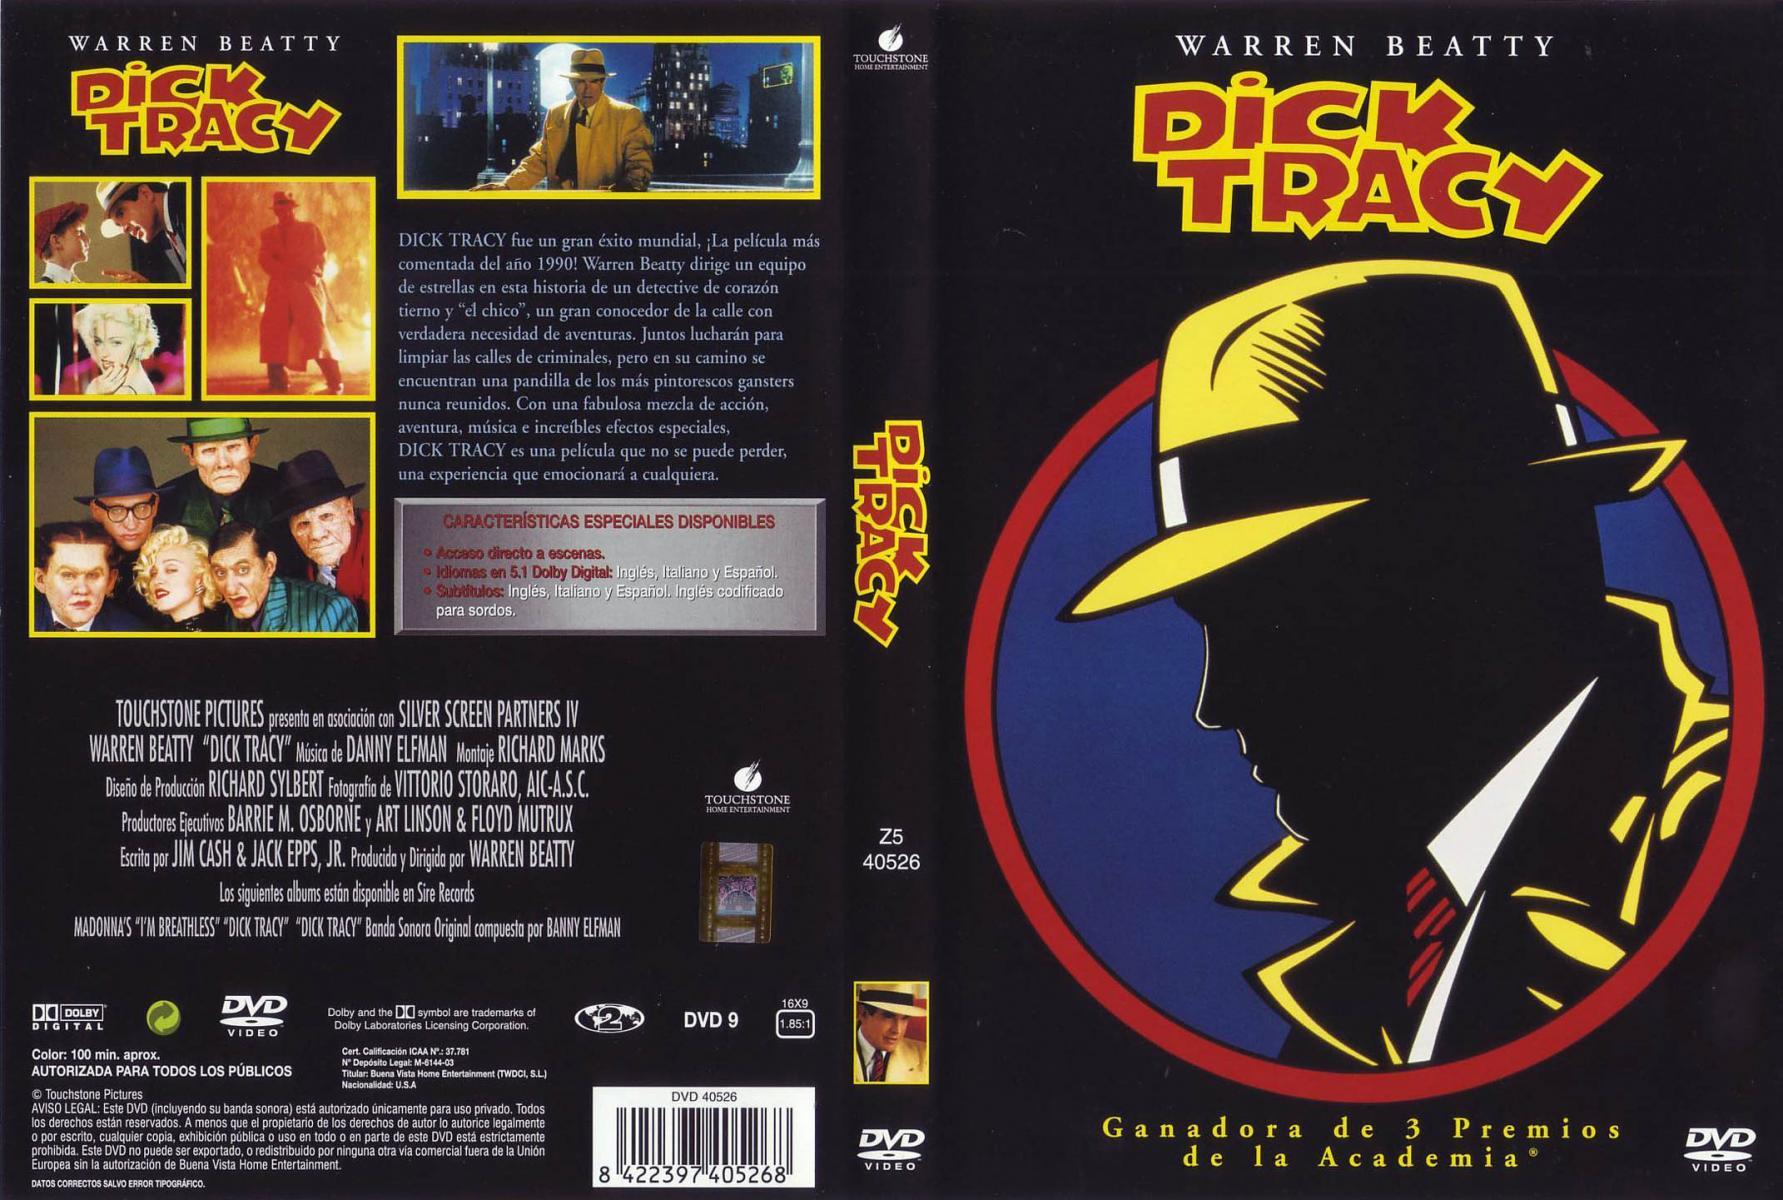 Dick tracy new movie